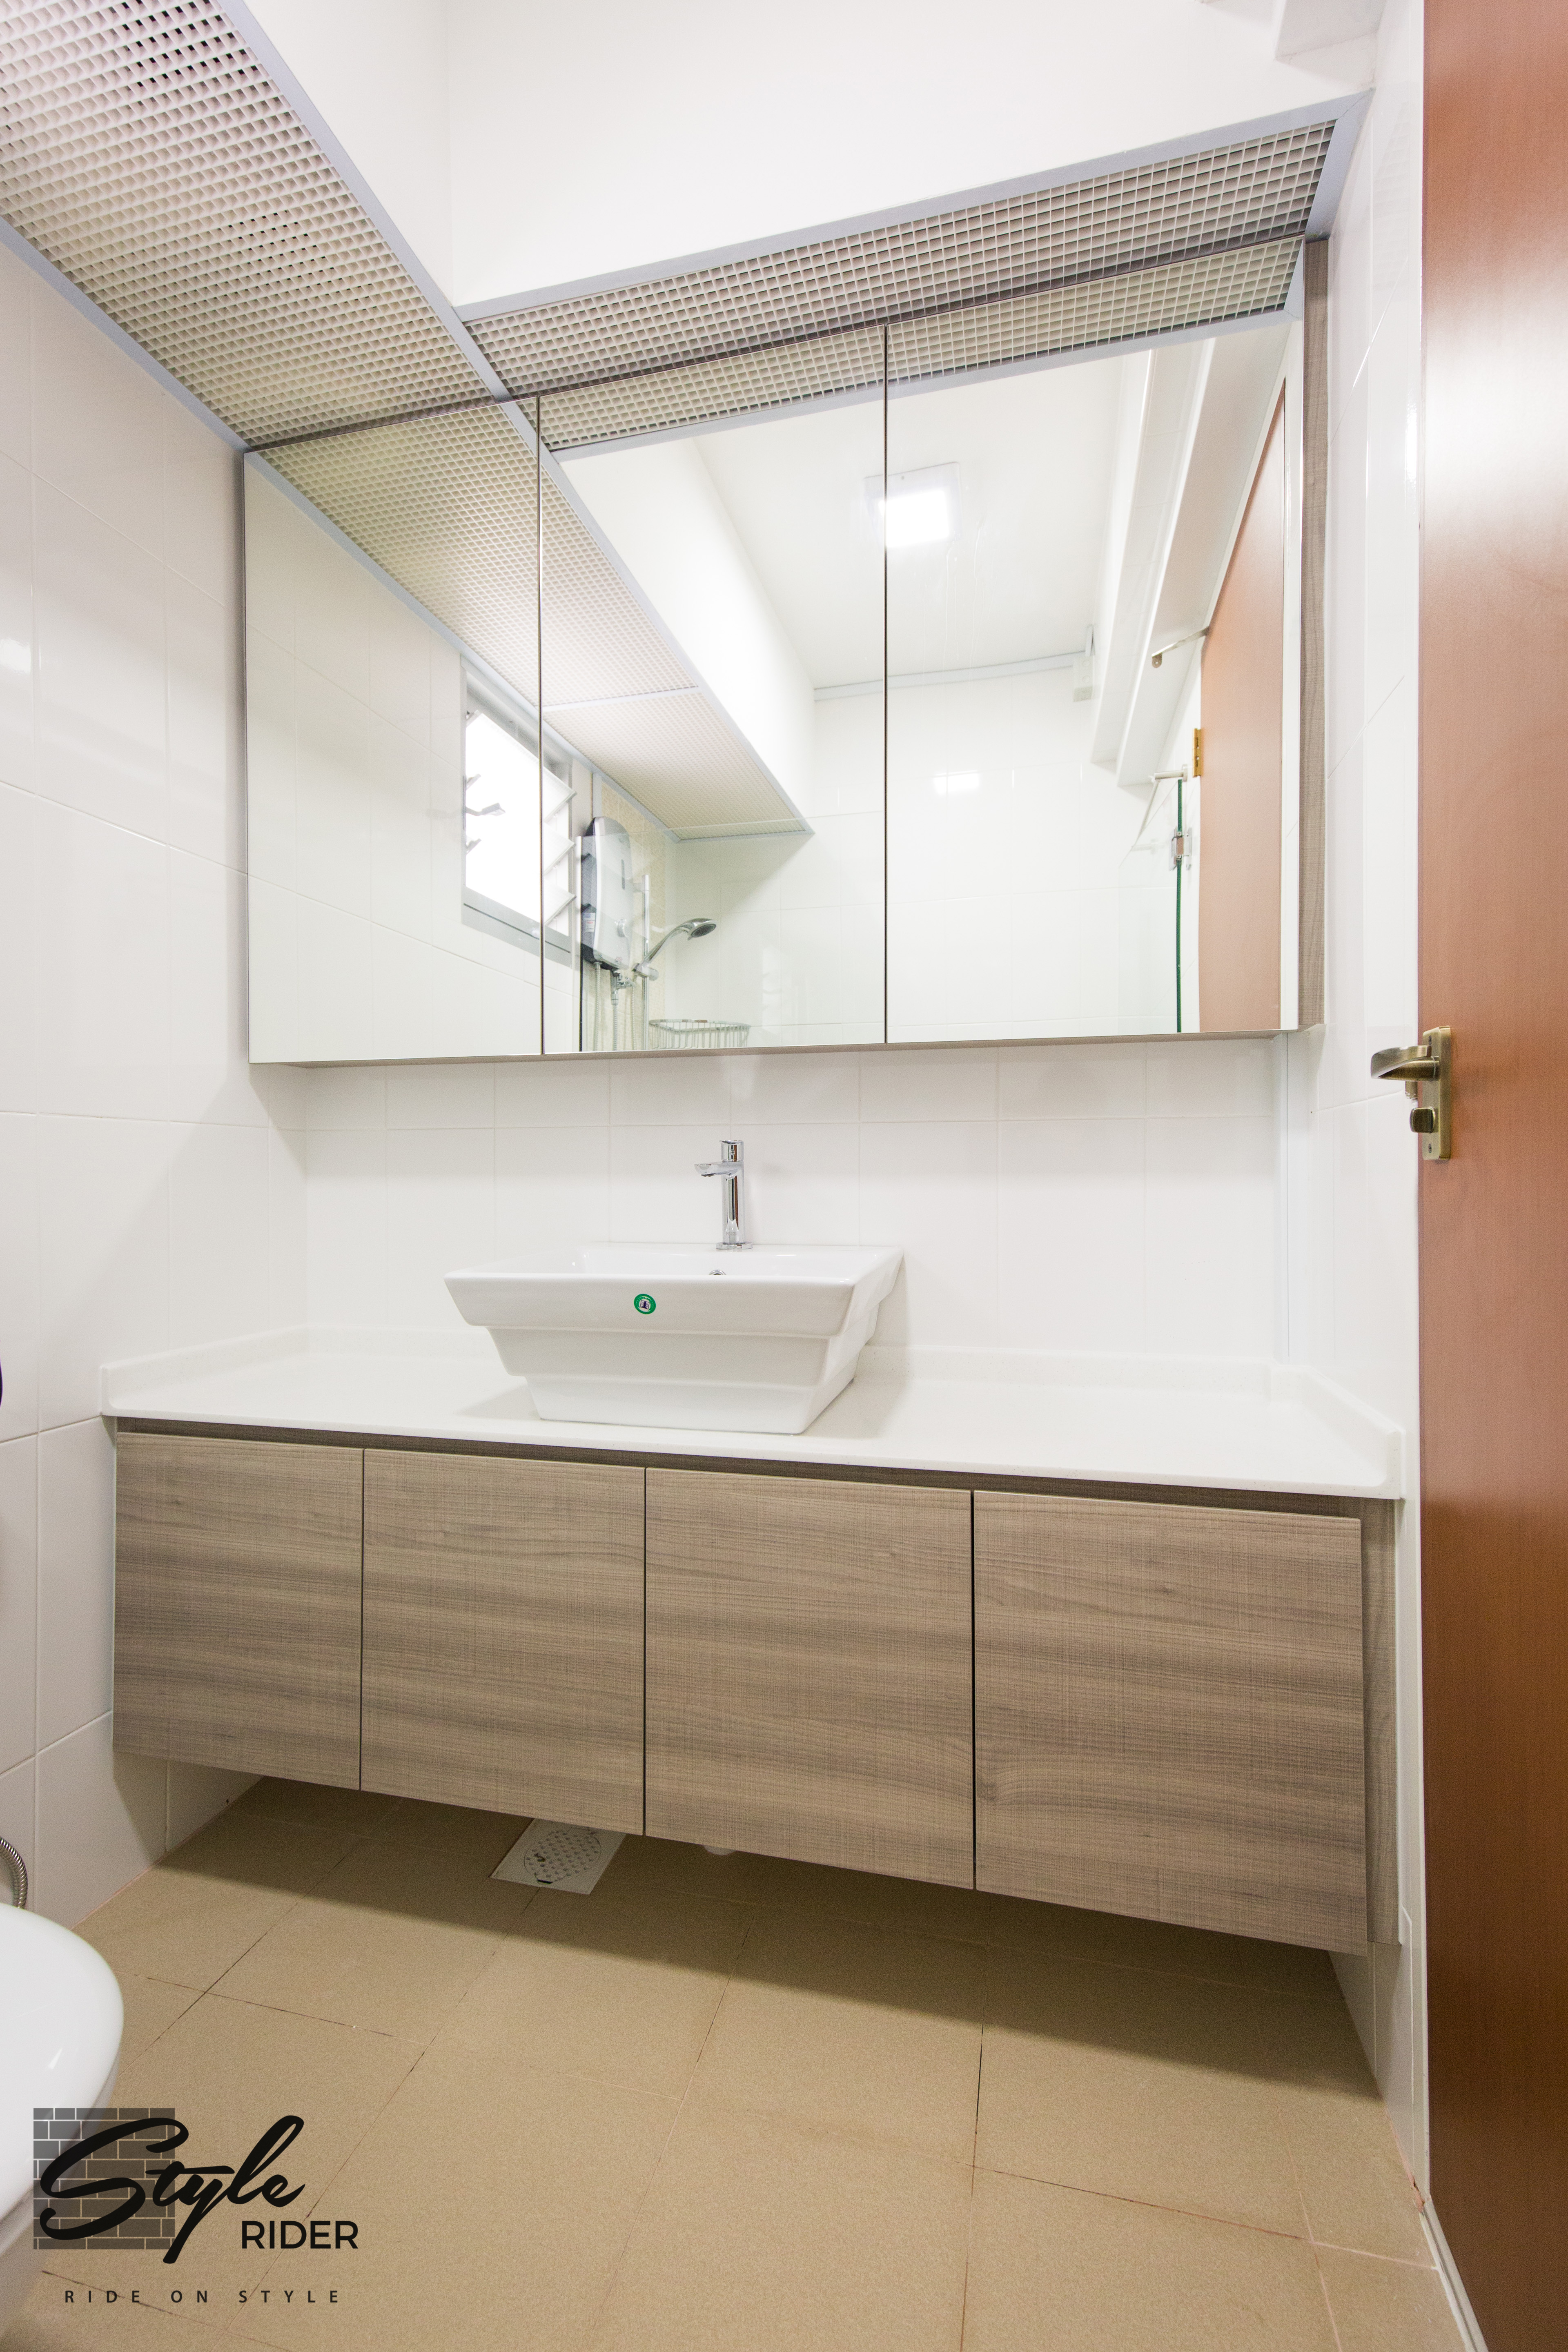 Eclectic, Modern, Scandinavian Design - Bathroom - HDB 4 Room - Design by Stylerider Pte Ltd